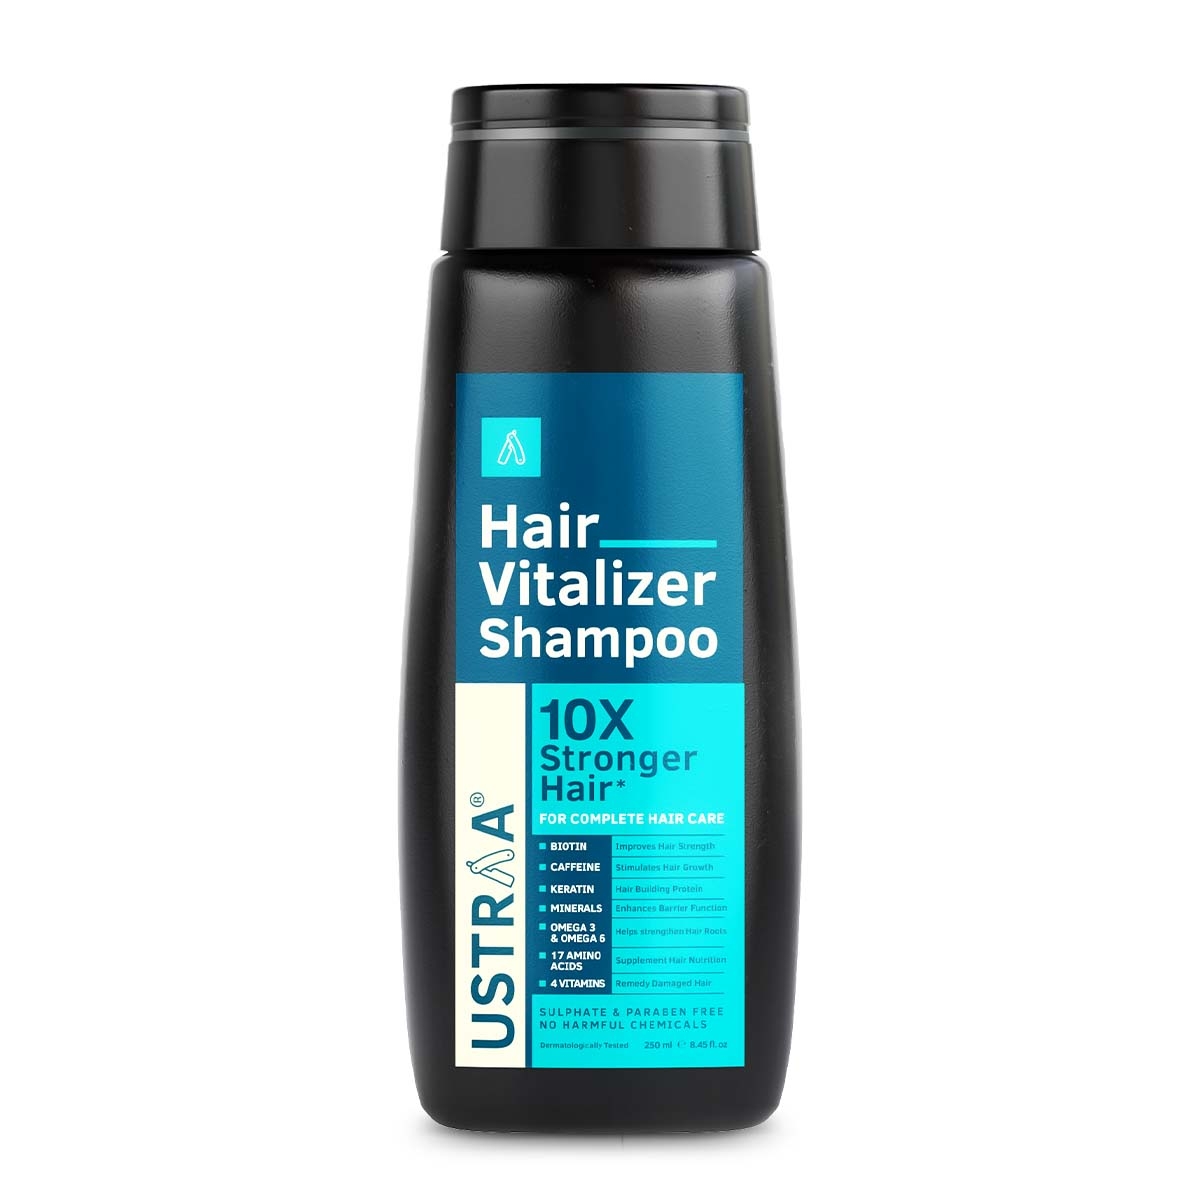 Ustraa | Ustraa Hair Vitalizer Shampoo - 250ml & Daily-Use Hair Conditioner - 100g 1